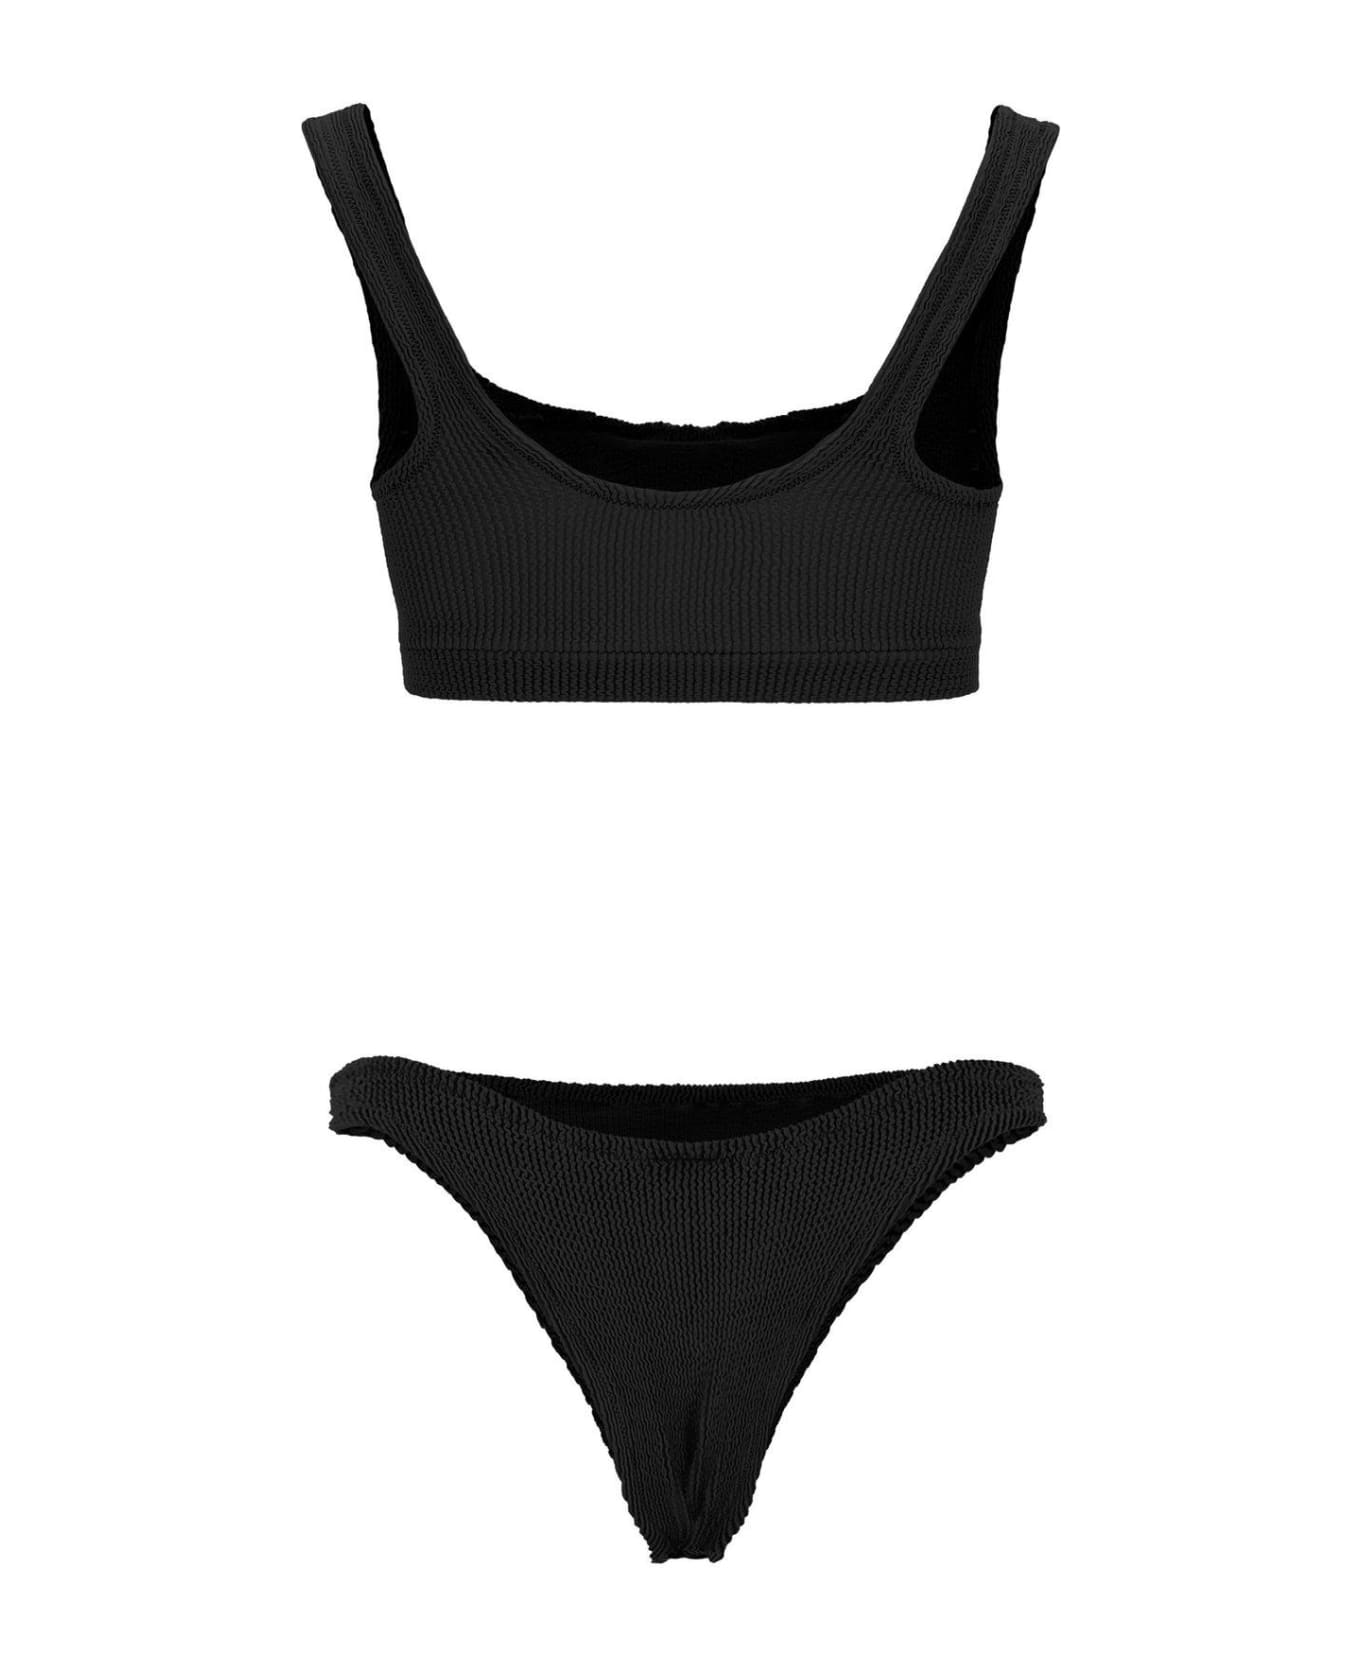 Reina Olga Ginny Boobs Stretch Bikini Set - Black